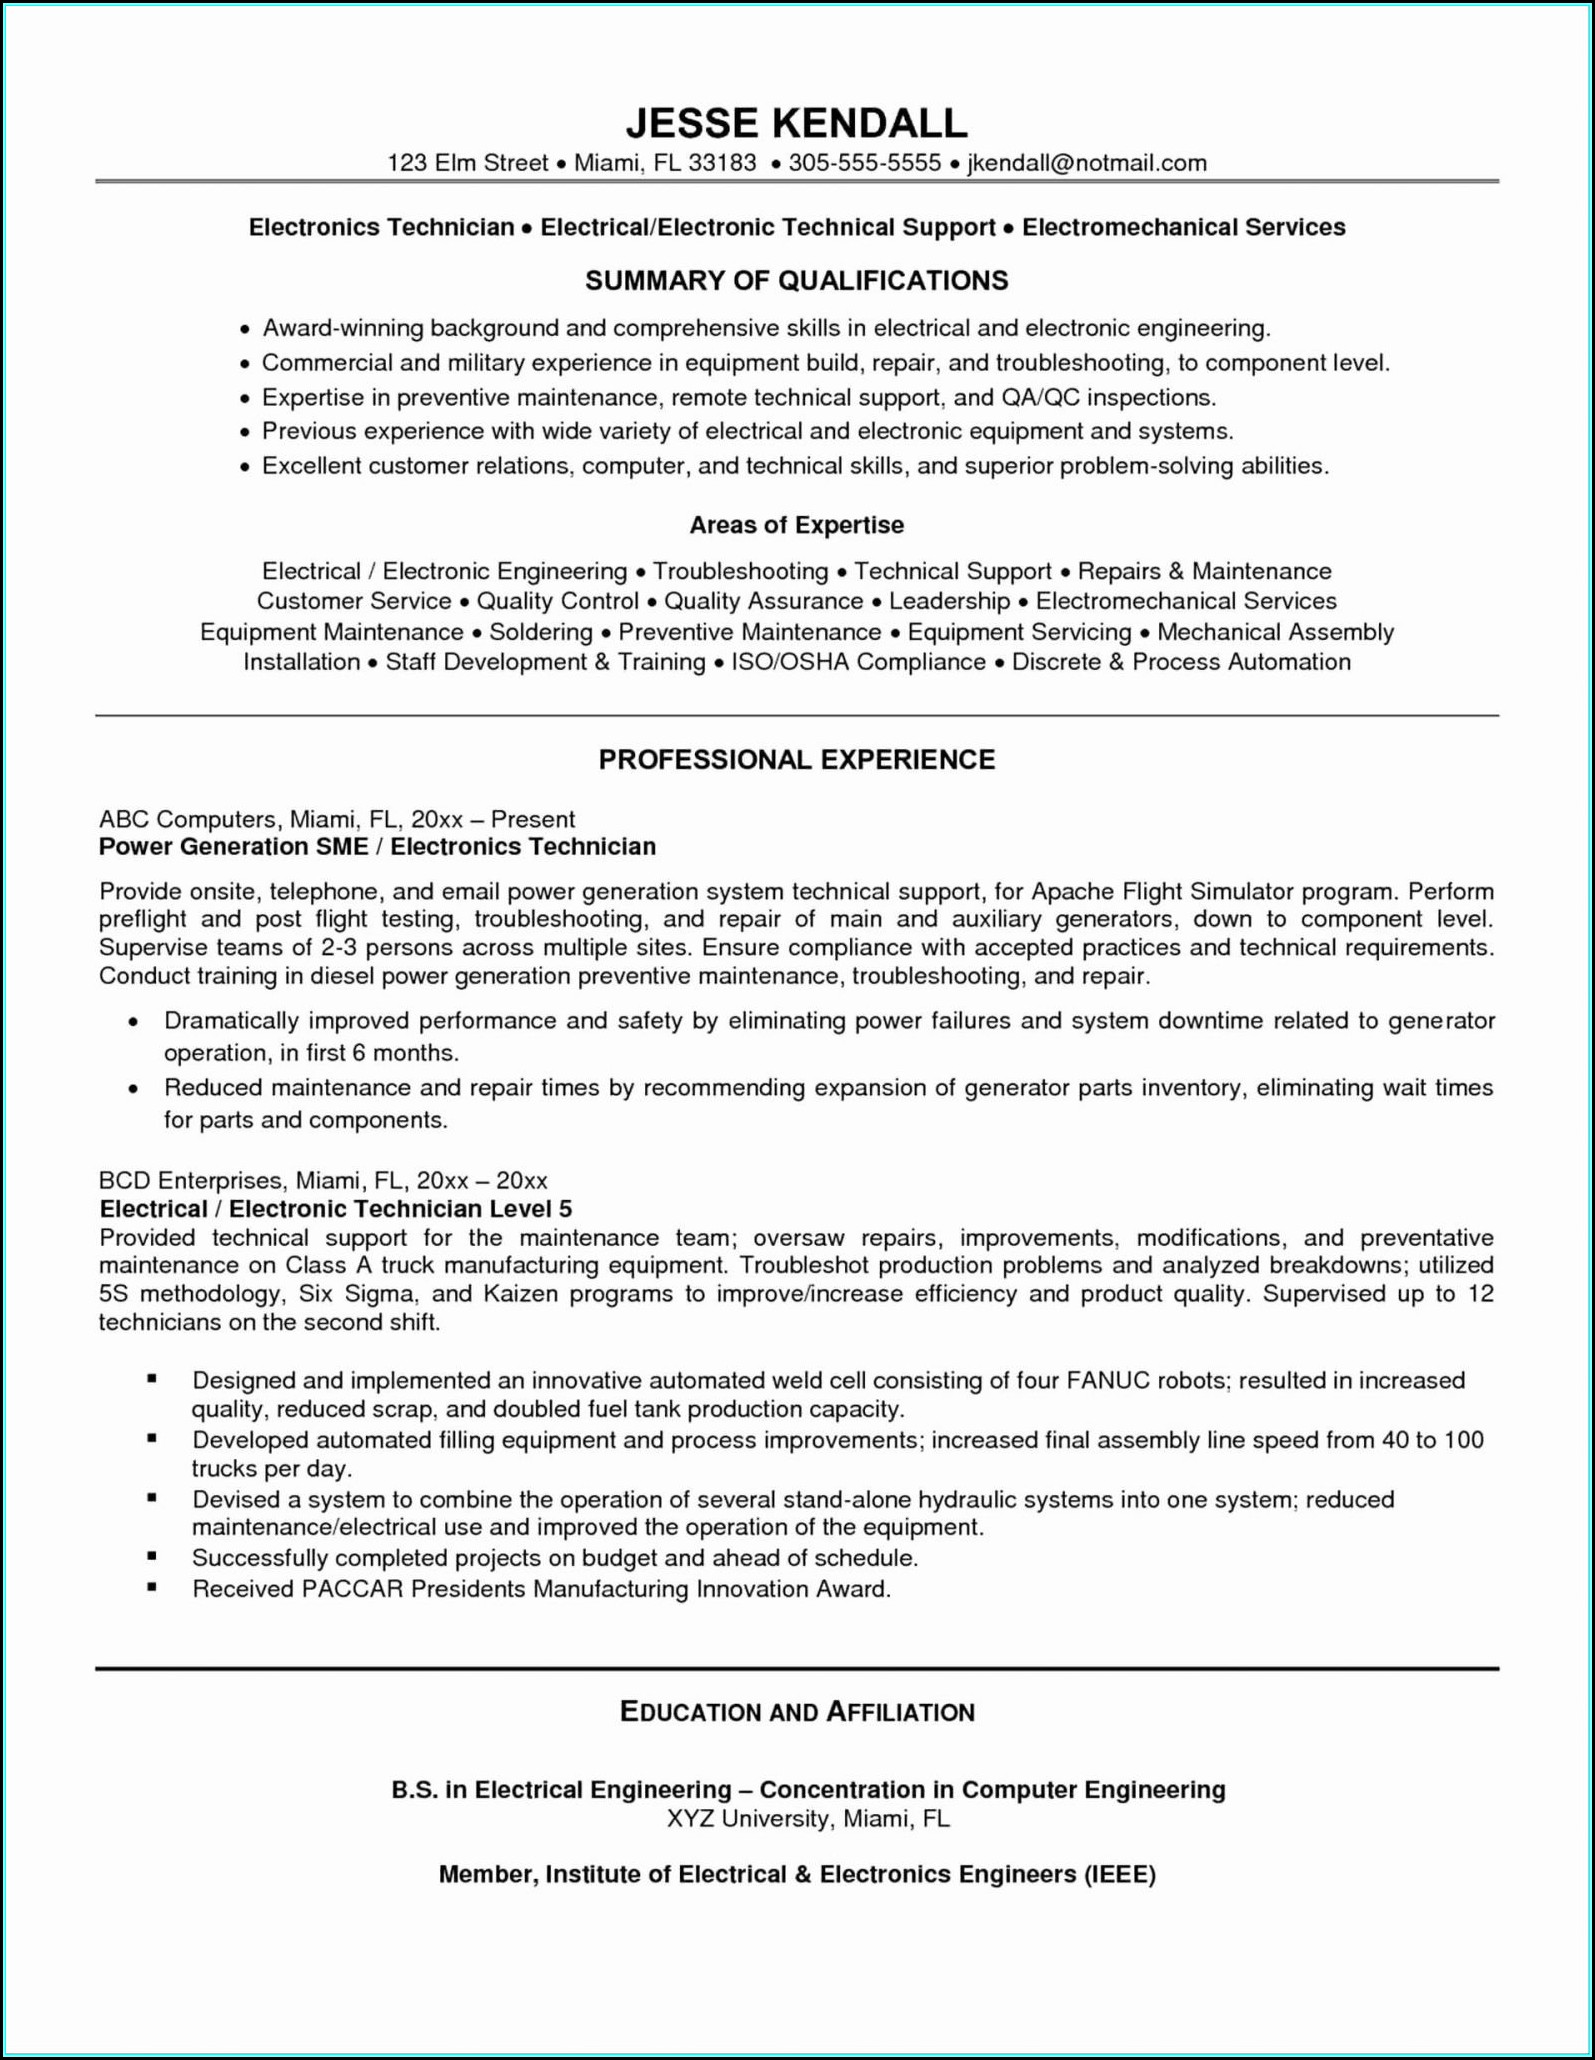 Resume For Pharmacy Technician Students